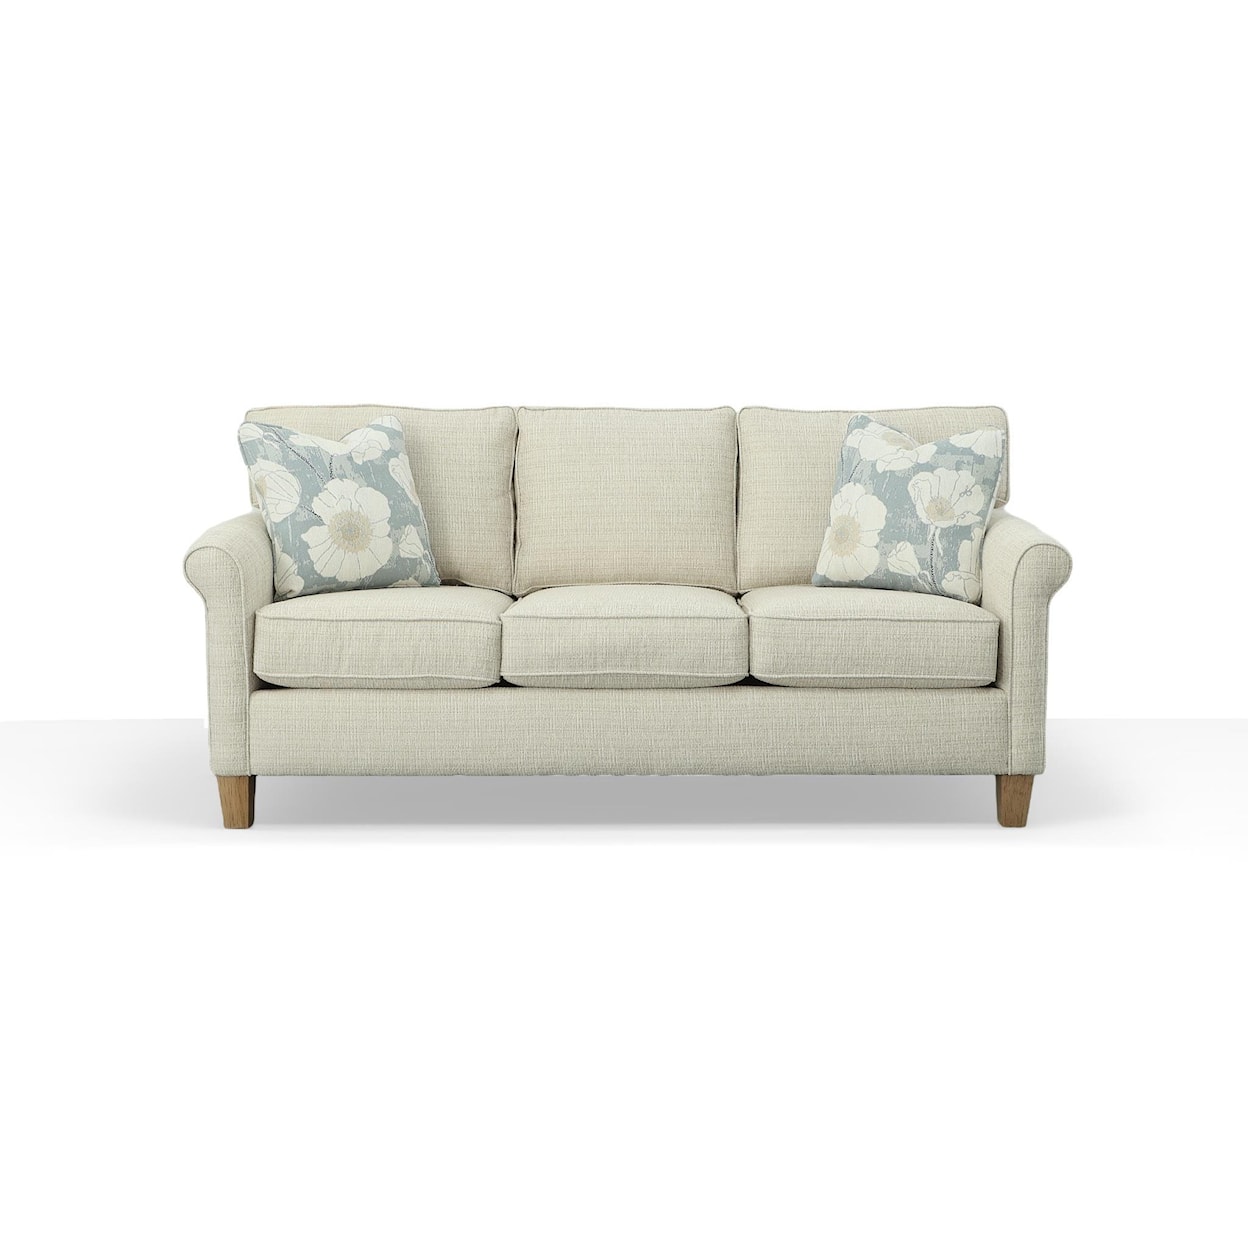 Craftmaster M9 Custom - Design Options 3 Seat Sofa